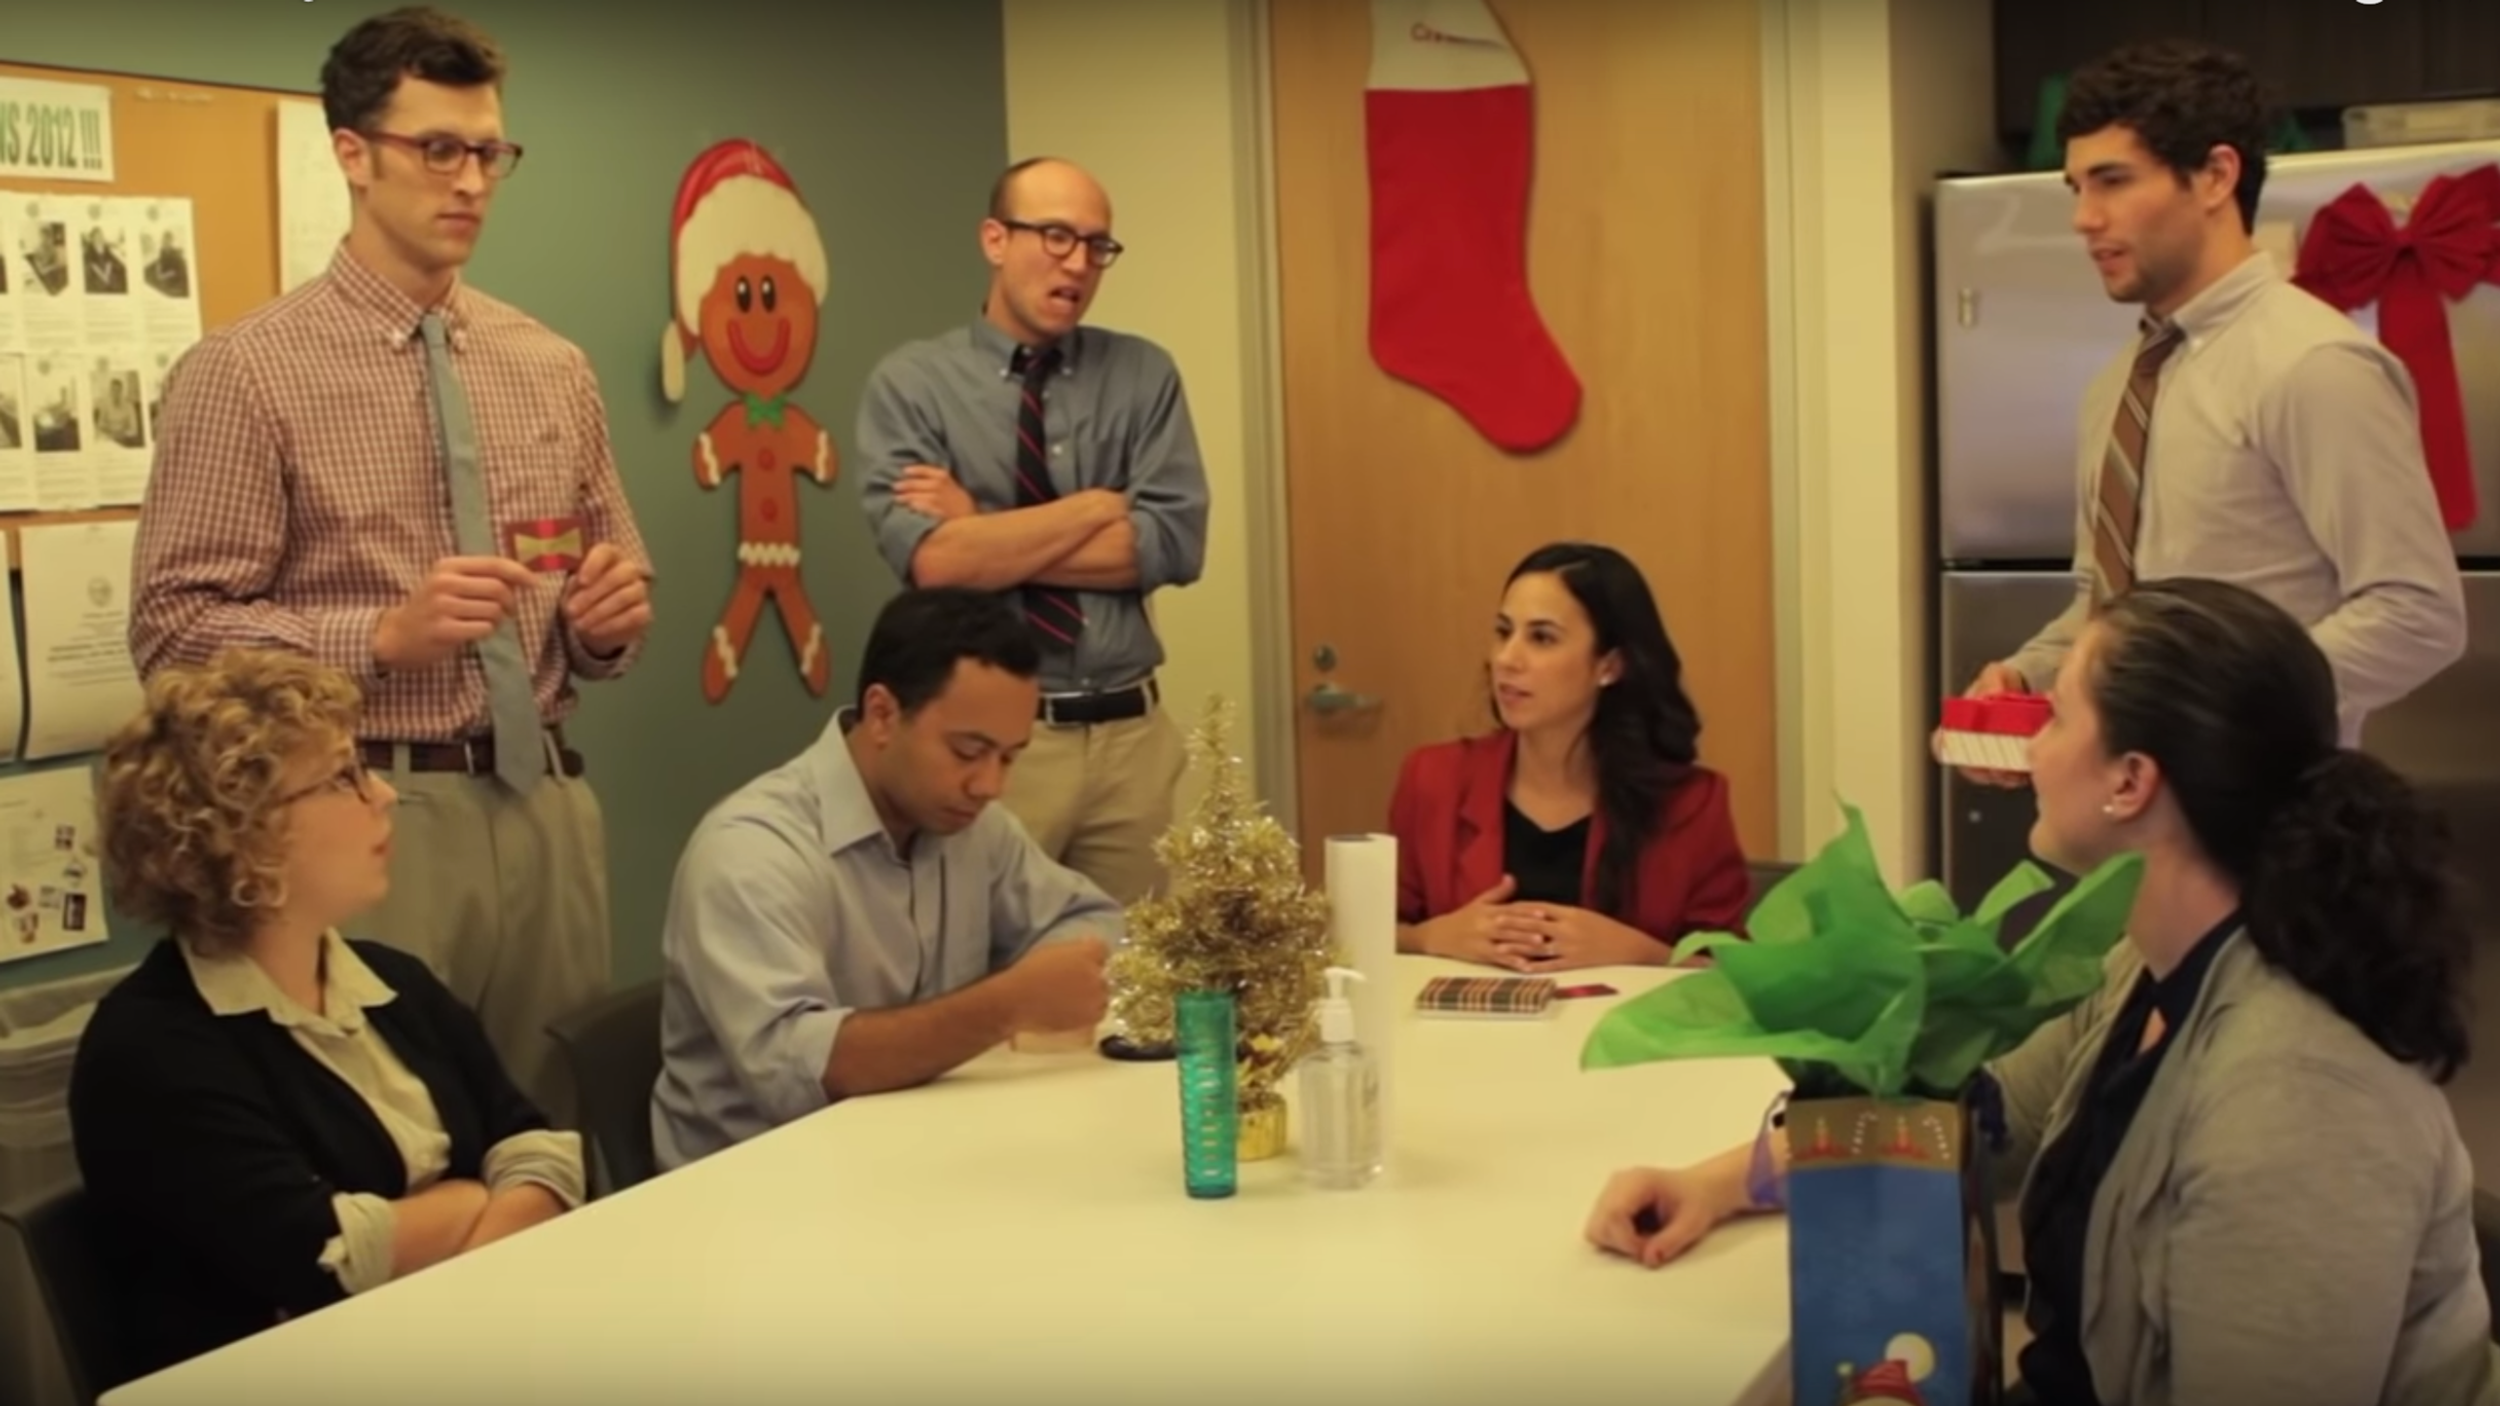 Harvard Sailing Team's: Office Secret Santa